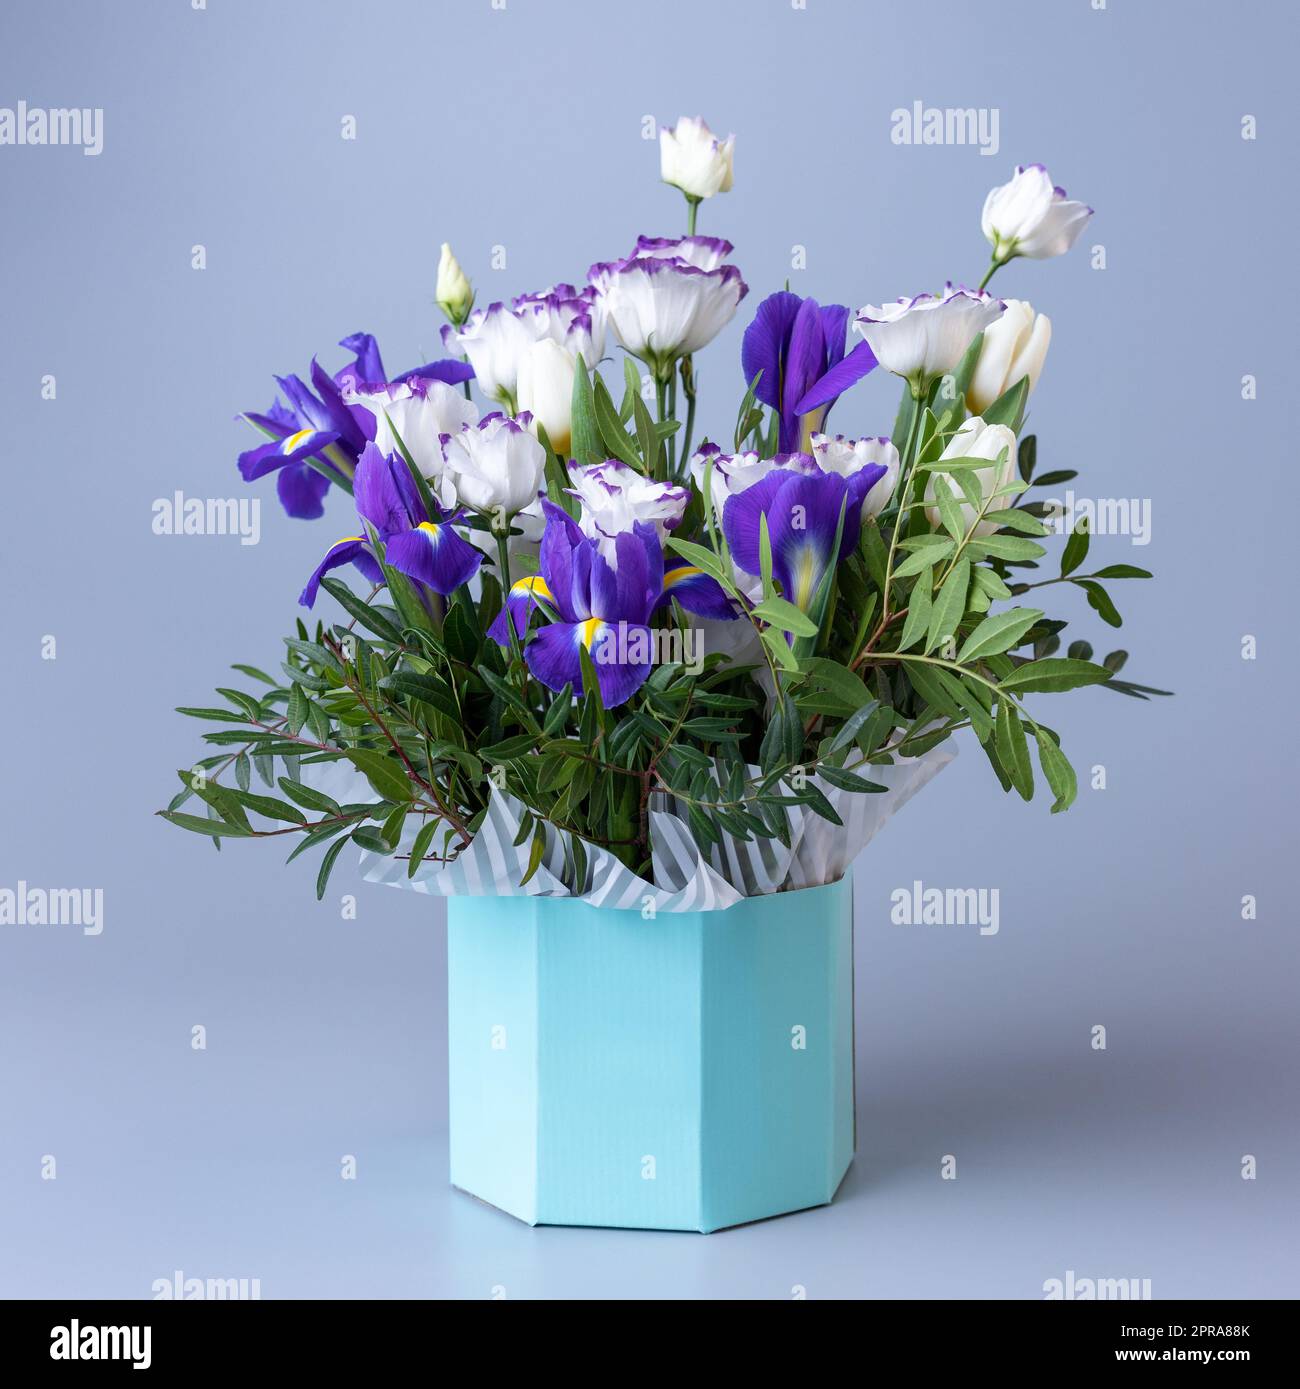 Hat Box Round with Spring Floral Design LARGE Vintage Cardboard